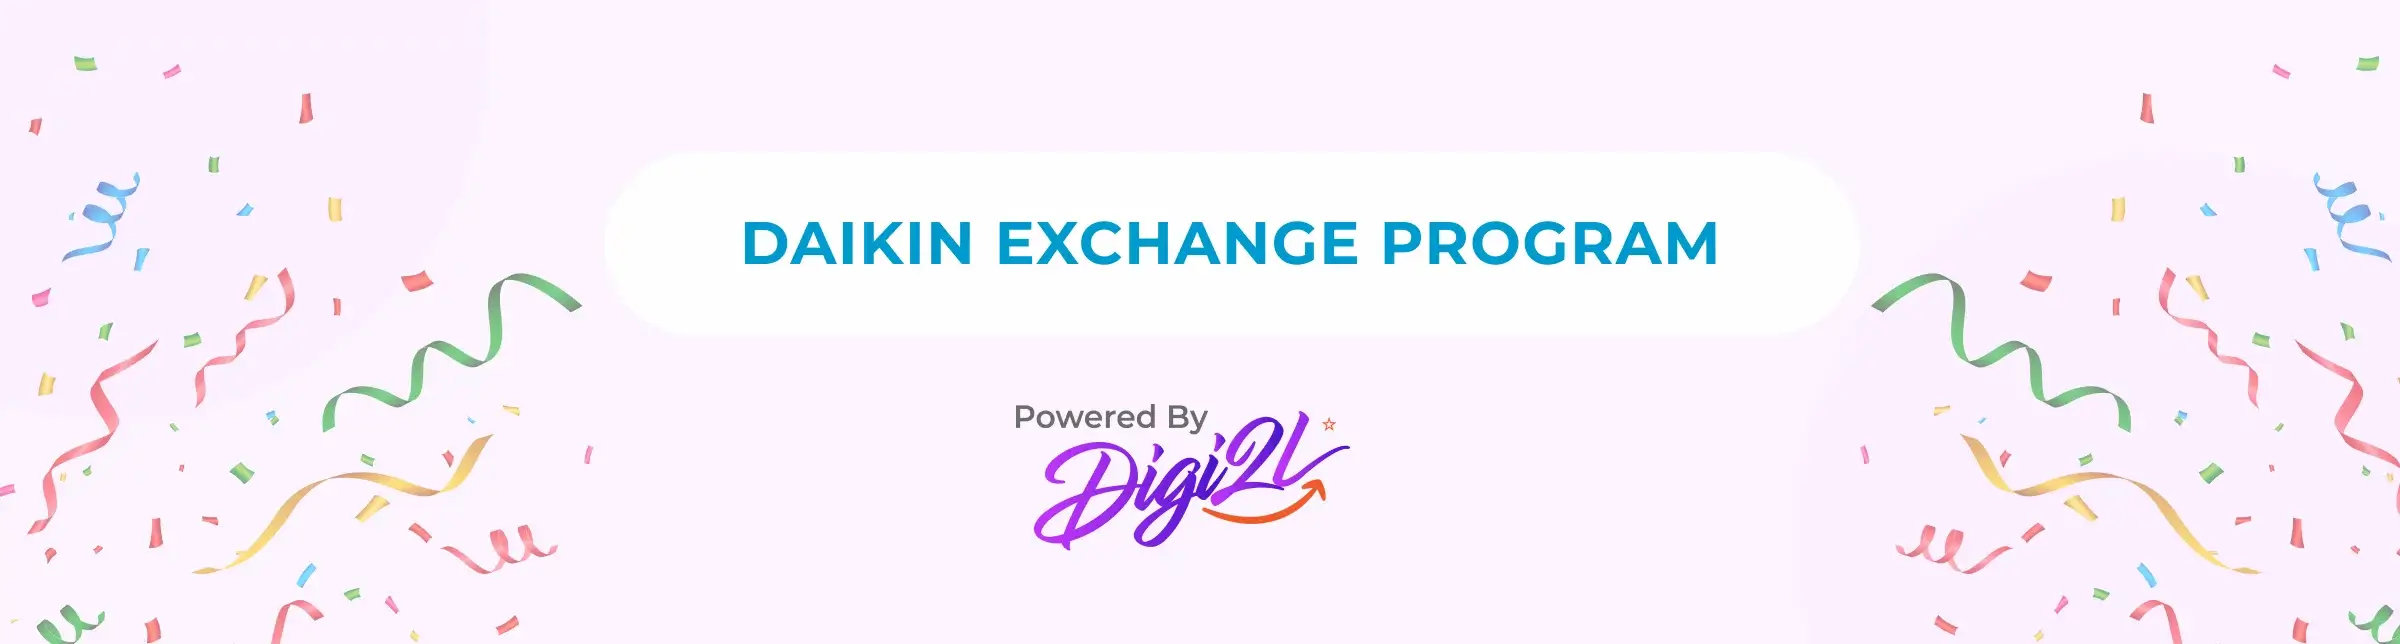 Daikin Exchange Program